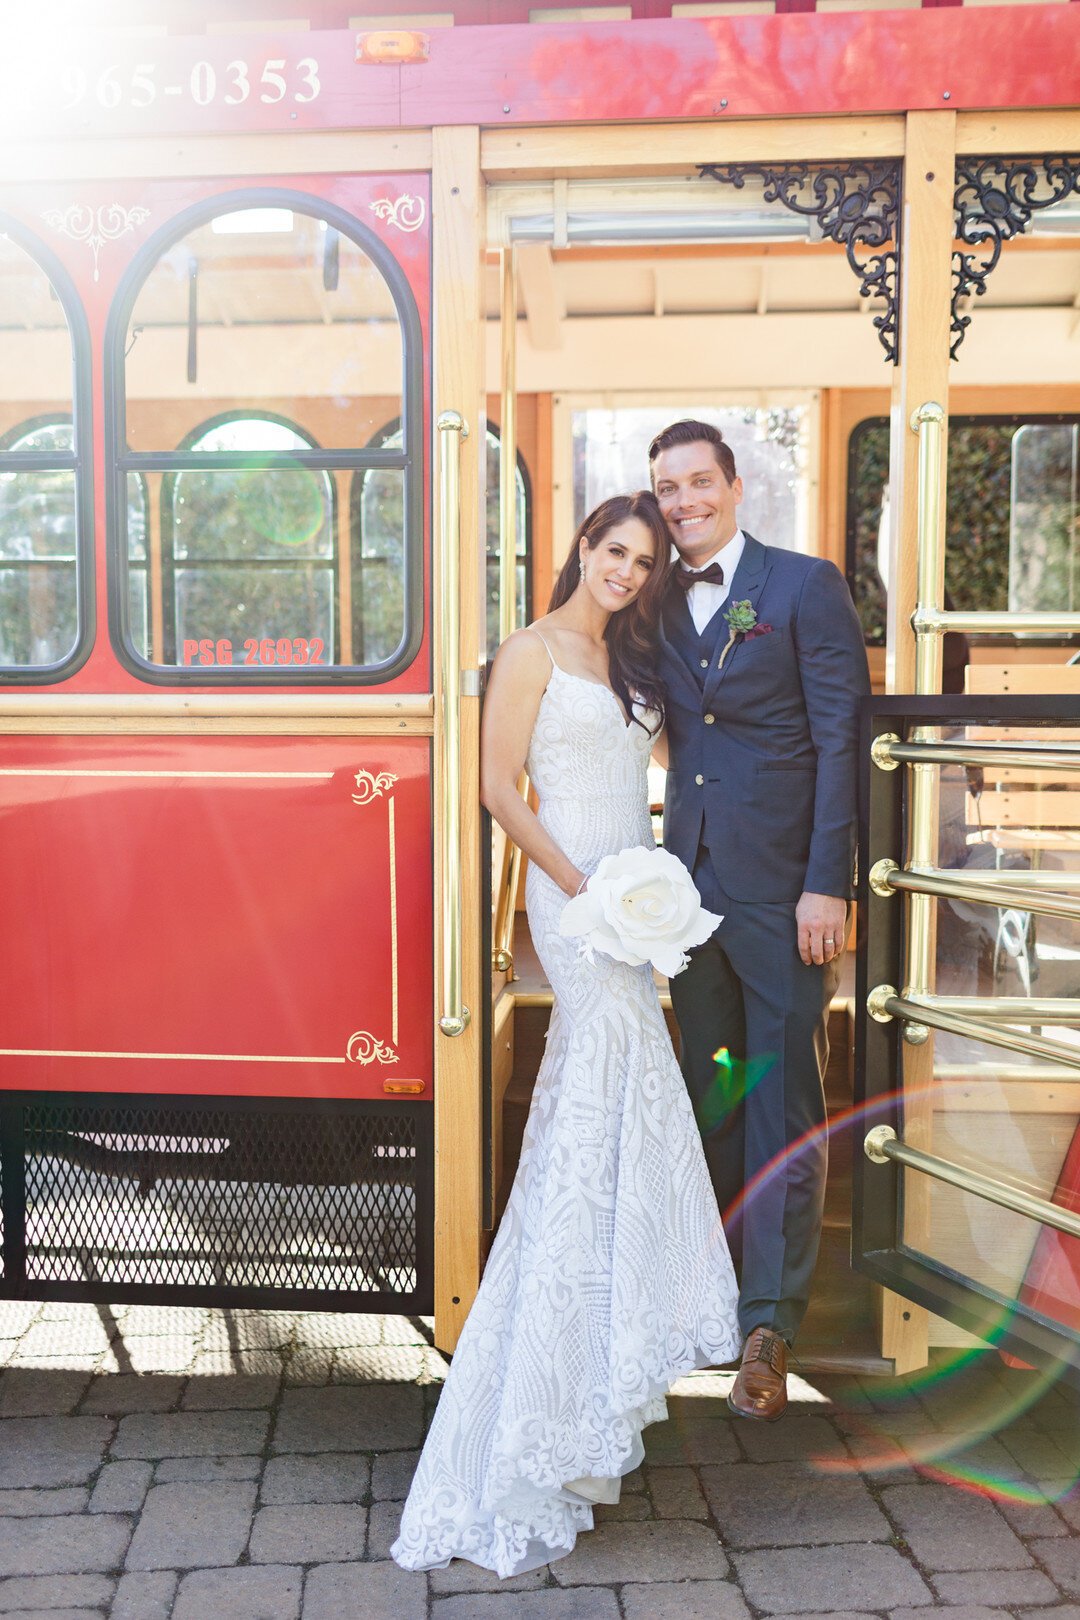 www.santabarbarawedding.com | Kaitie Brainerd | Santa Barbara Courthouse | Blush by Hayley Paige | Indochino | Santa Barbara Trolley | Bride and Groom on the Trolley